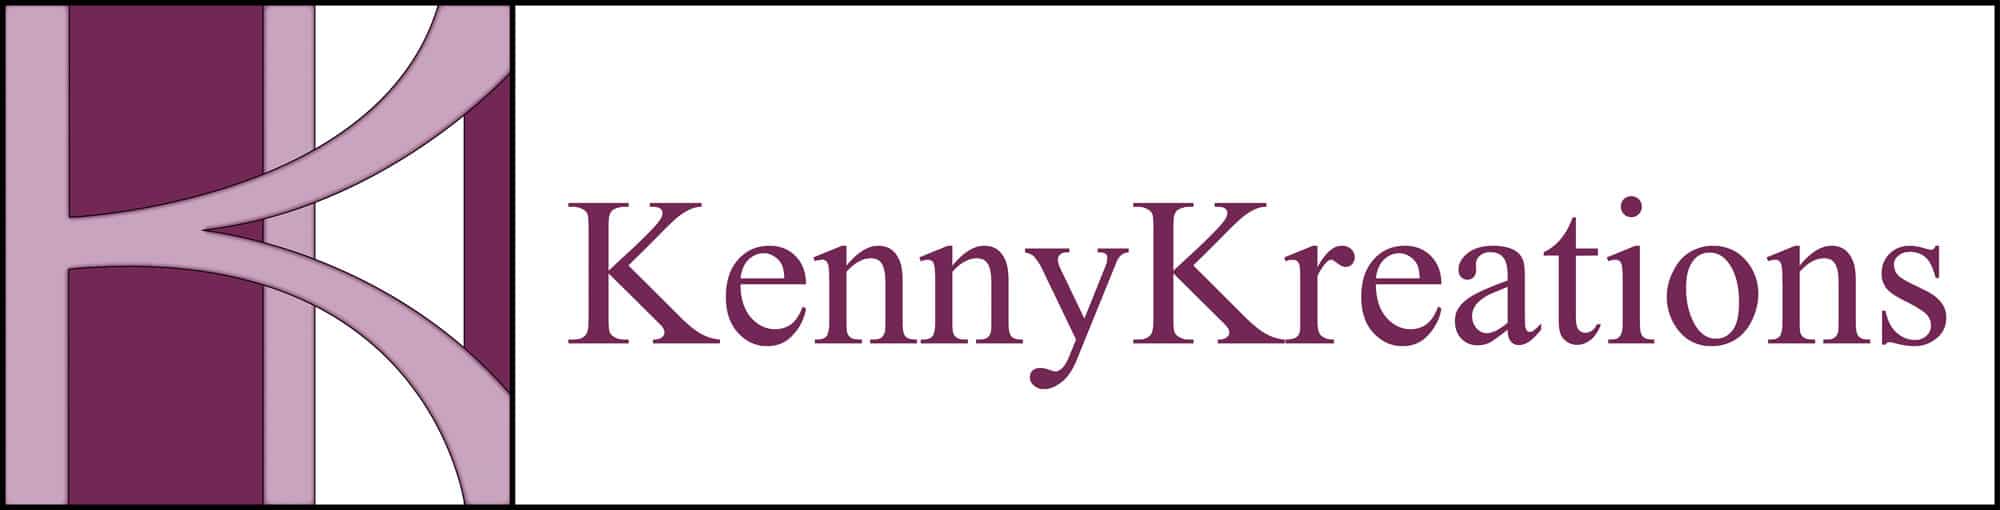 KennyKreations